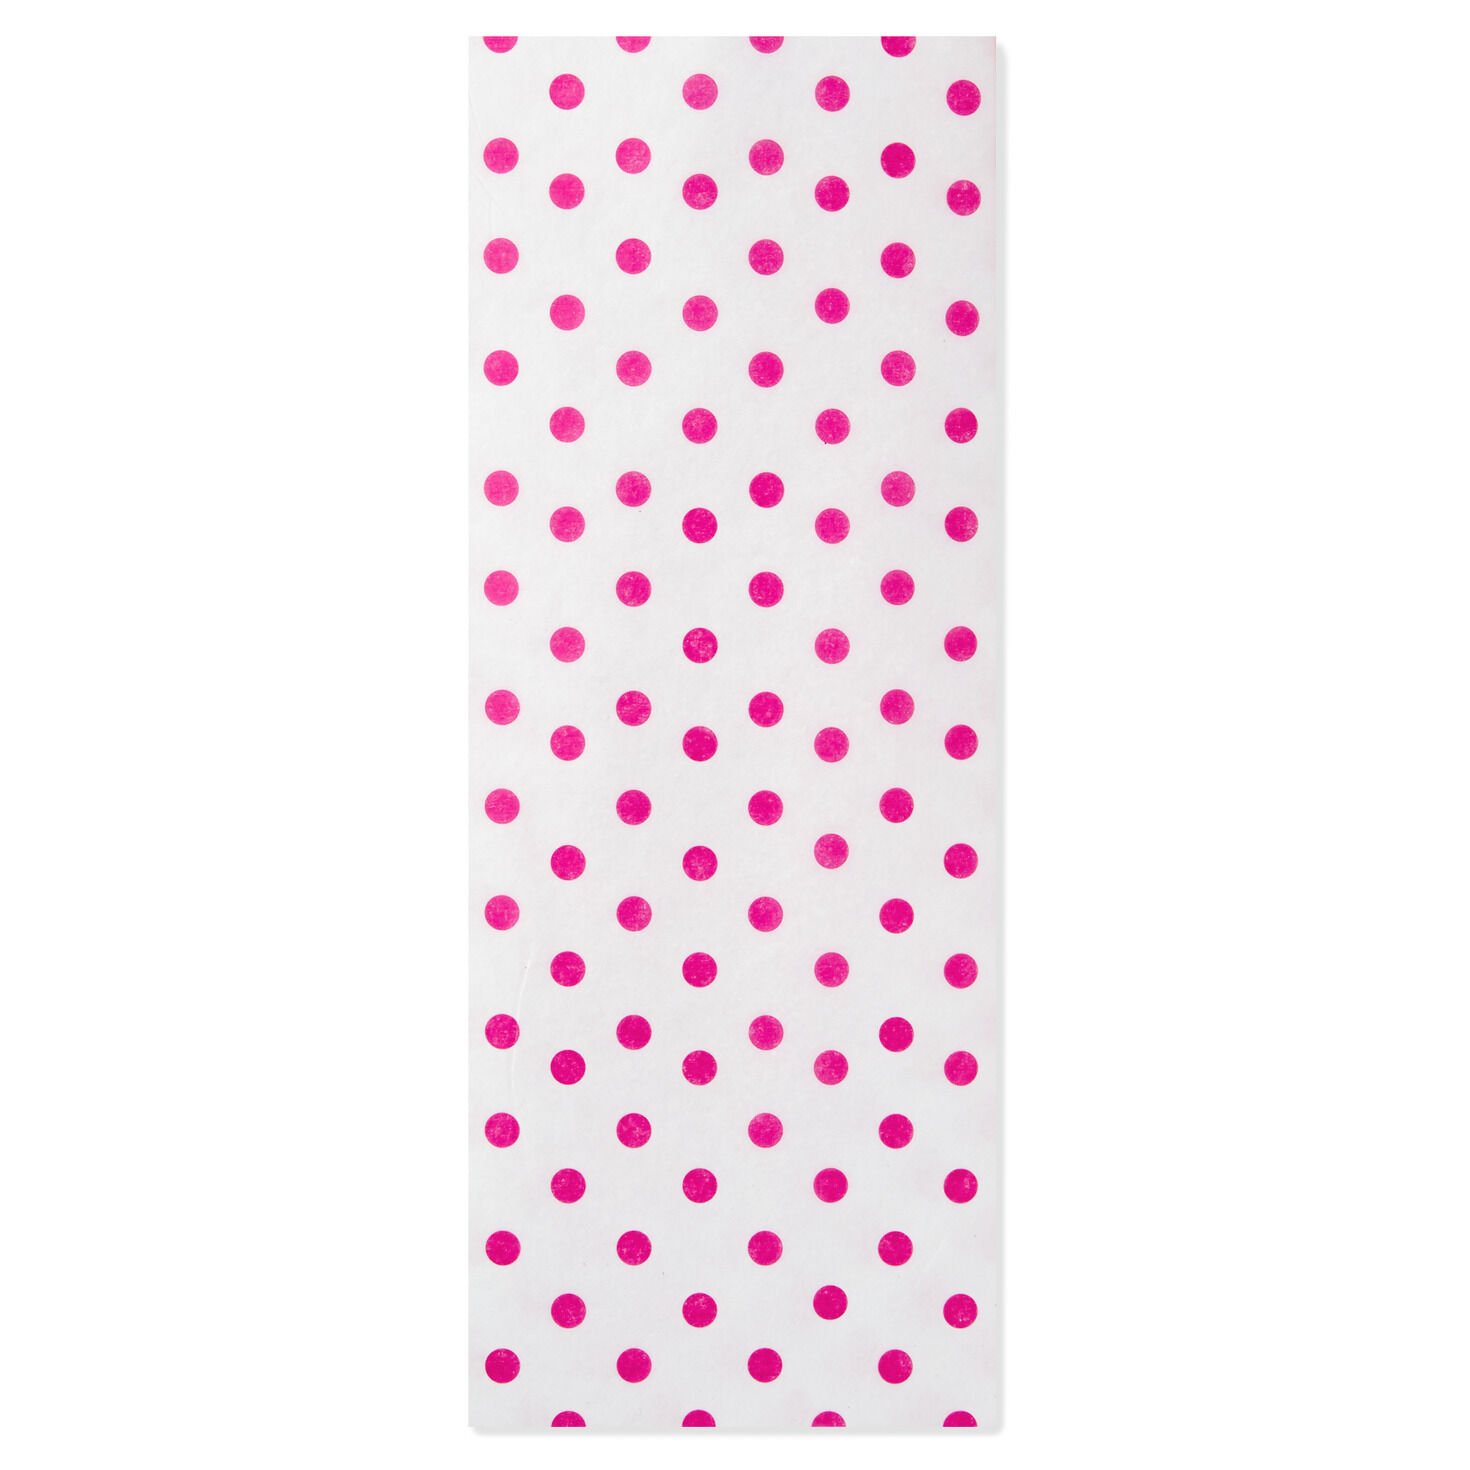 Pink and Orange Diagonal Stripes Tissue Paper, 4 sheets - Tissue - Hallmark